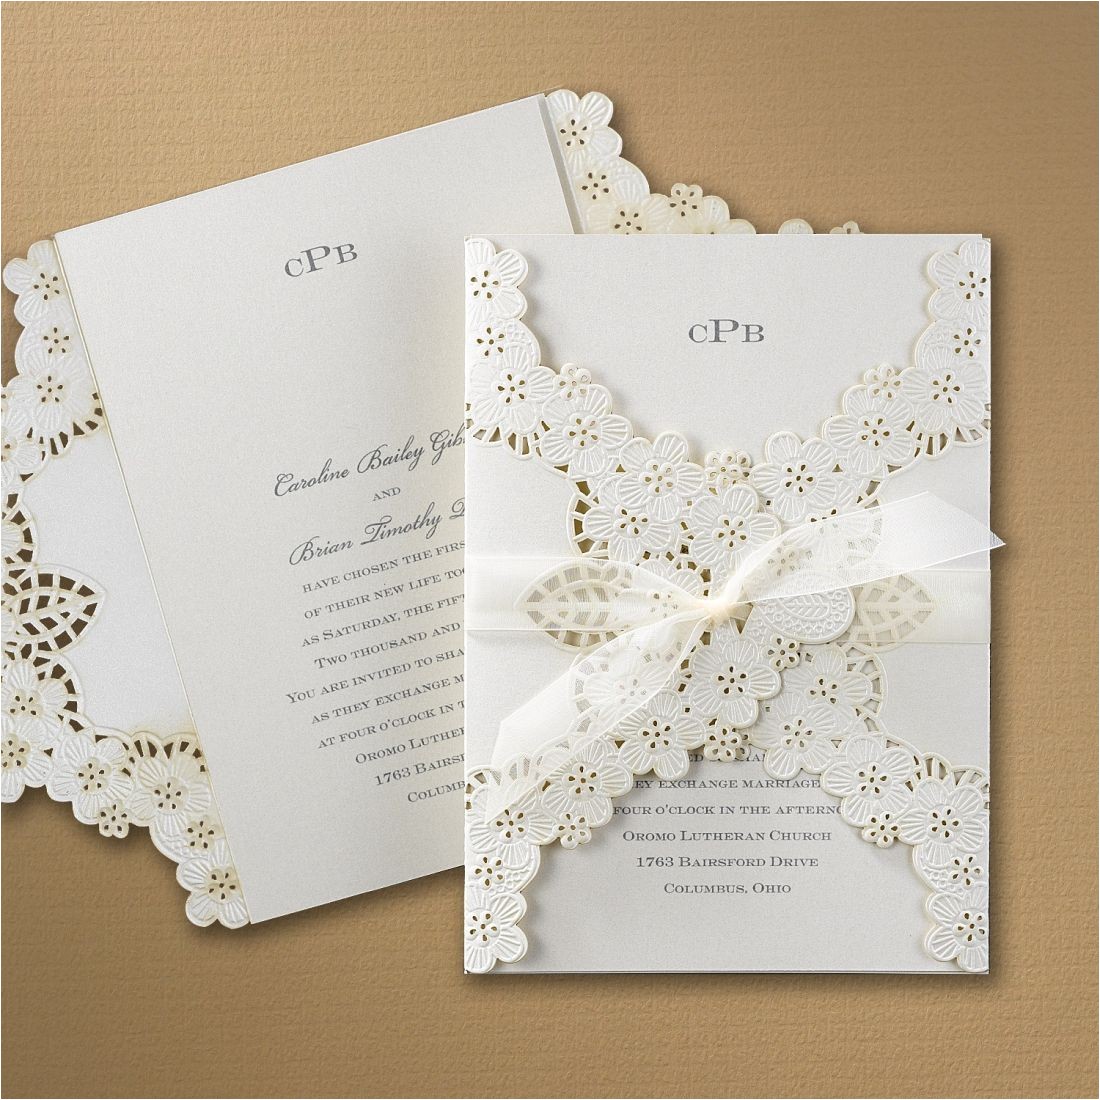 carlson crafts wedding invitations ideas tips carlson craft wedding invitations within carlson